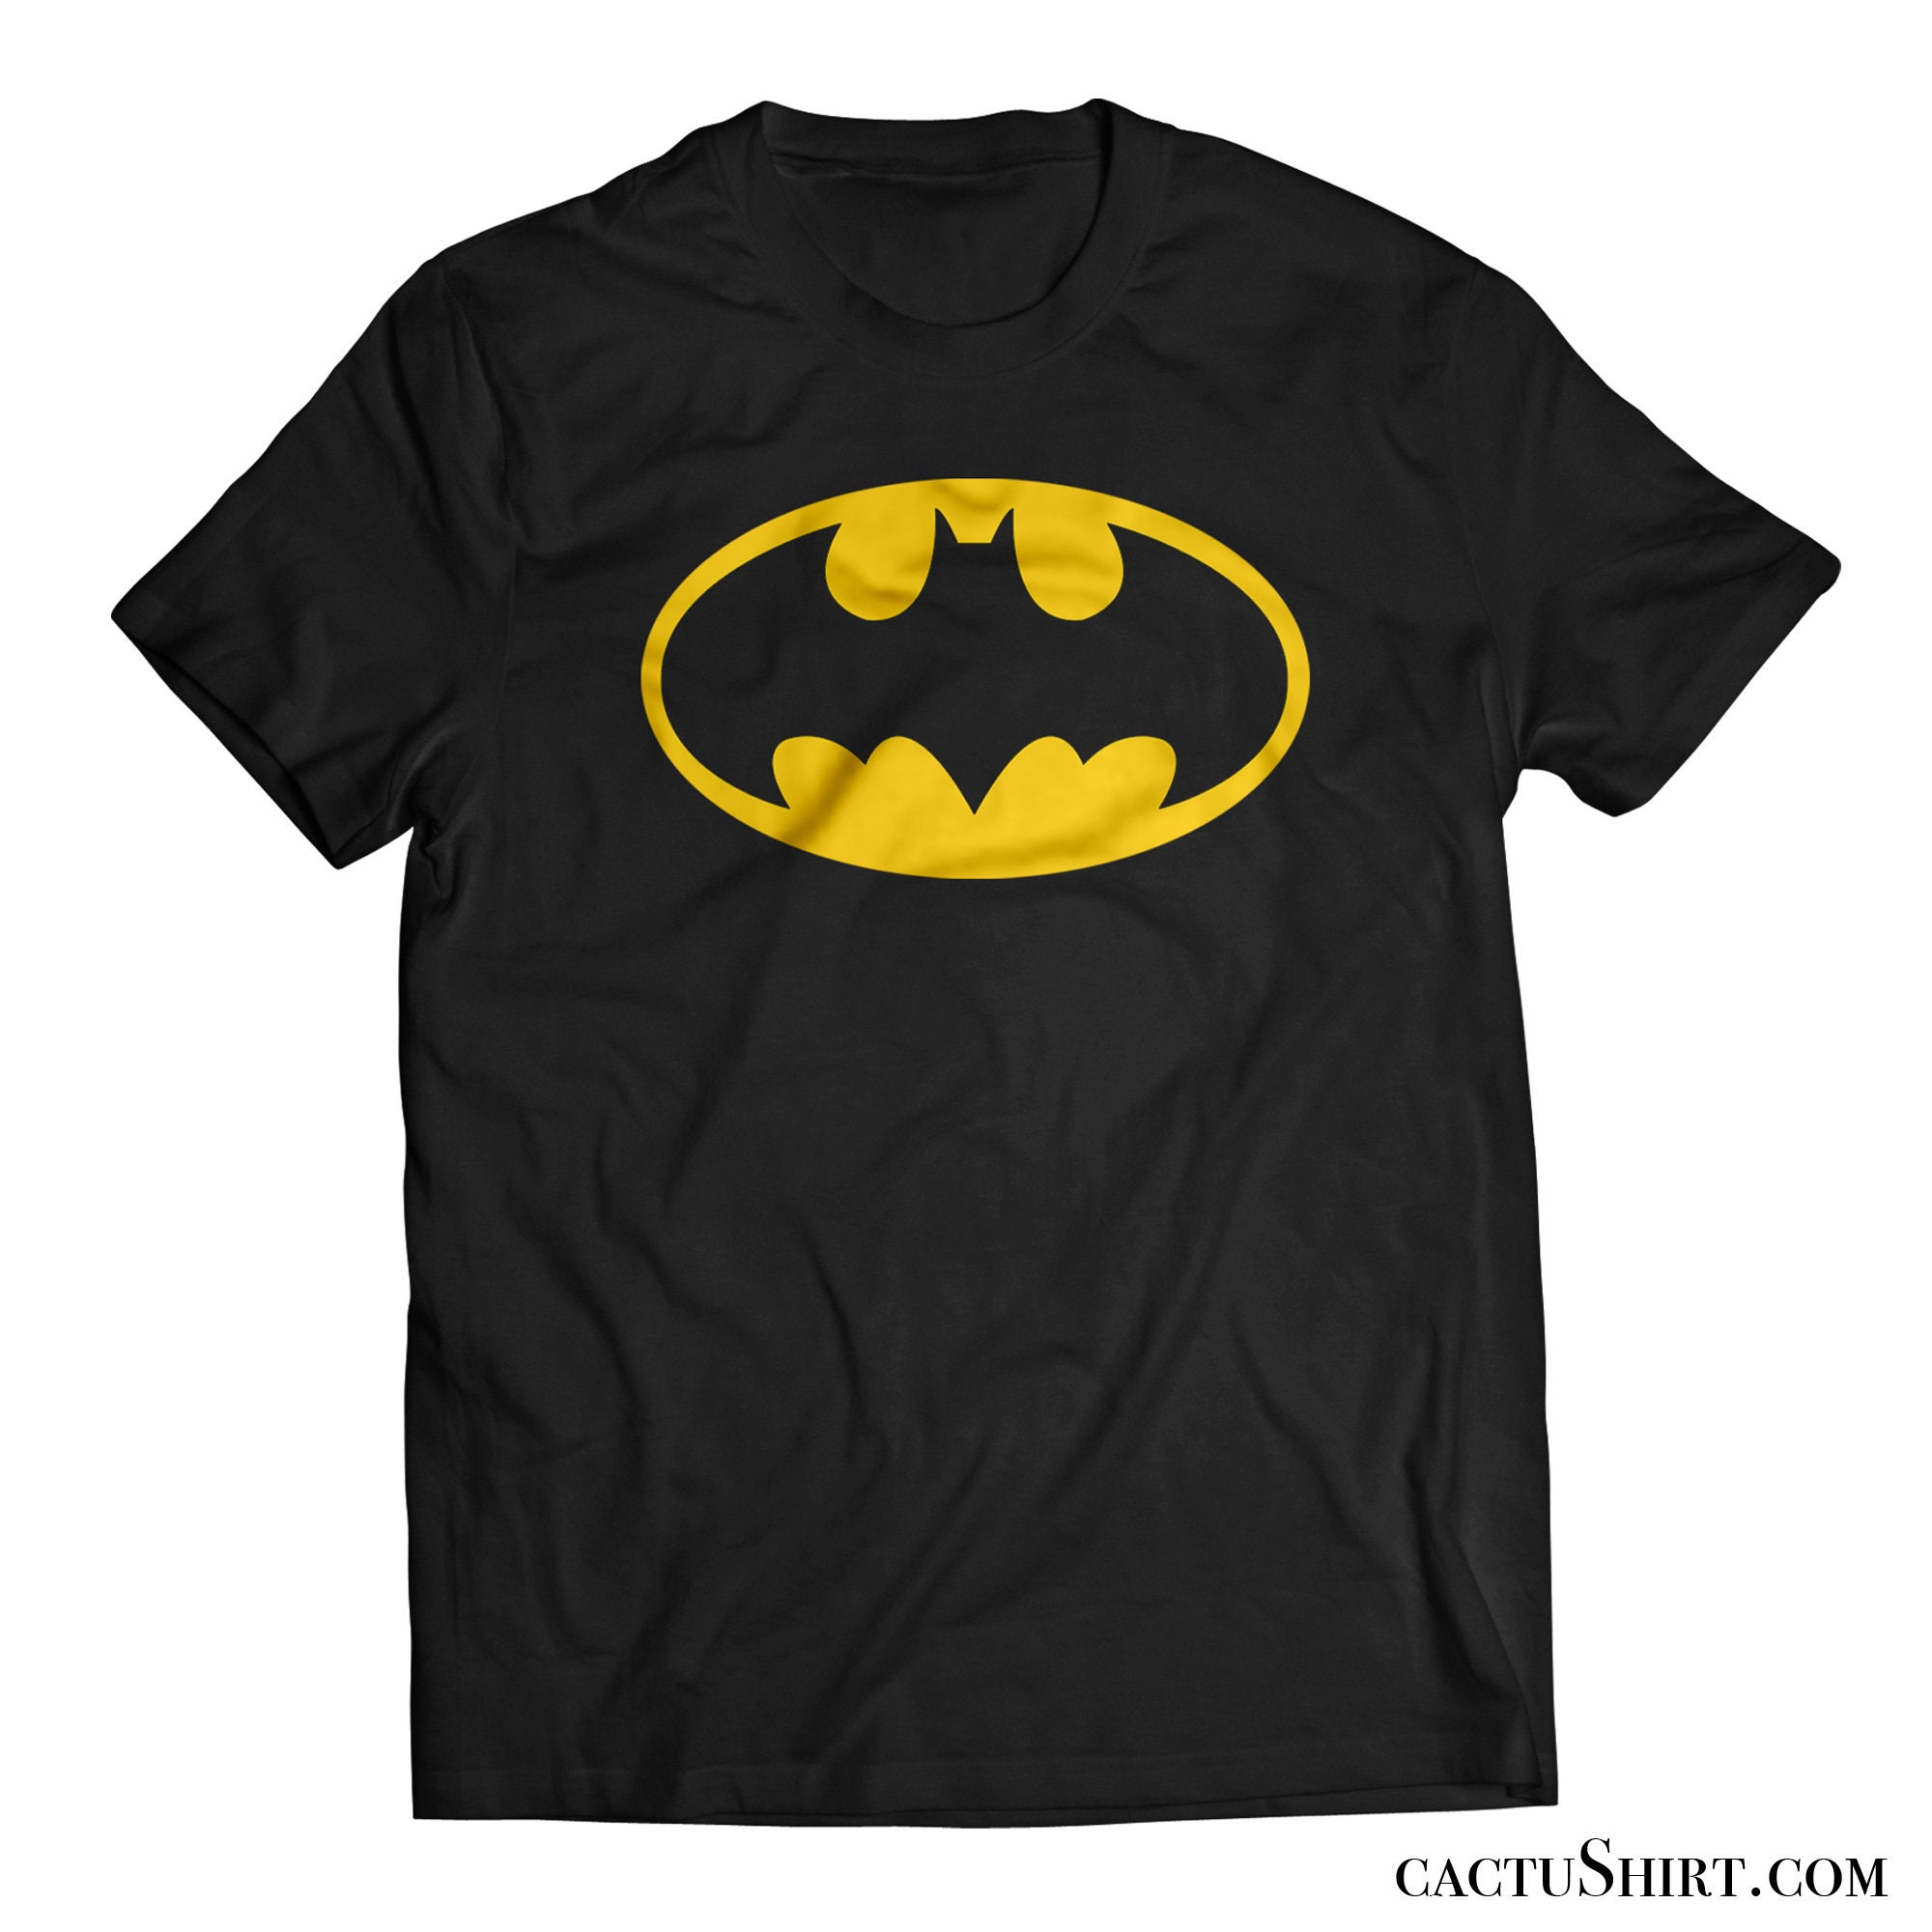 Batman logo t shirt batman comics logo tee shirt batman logo | Etsy